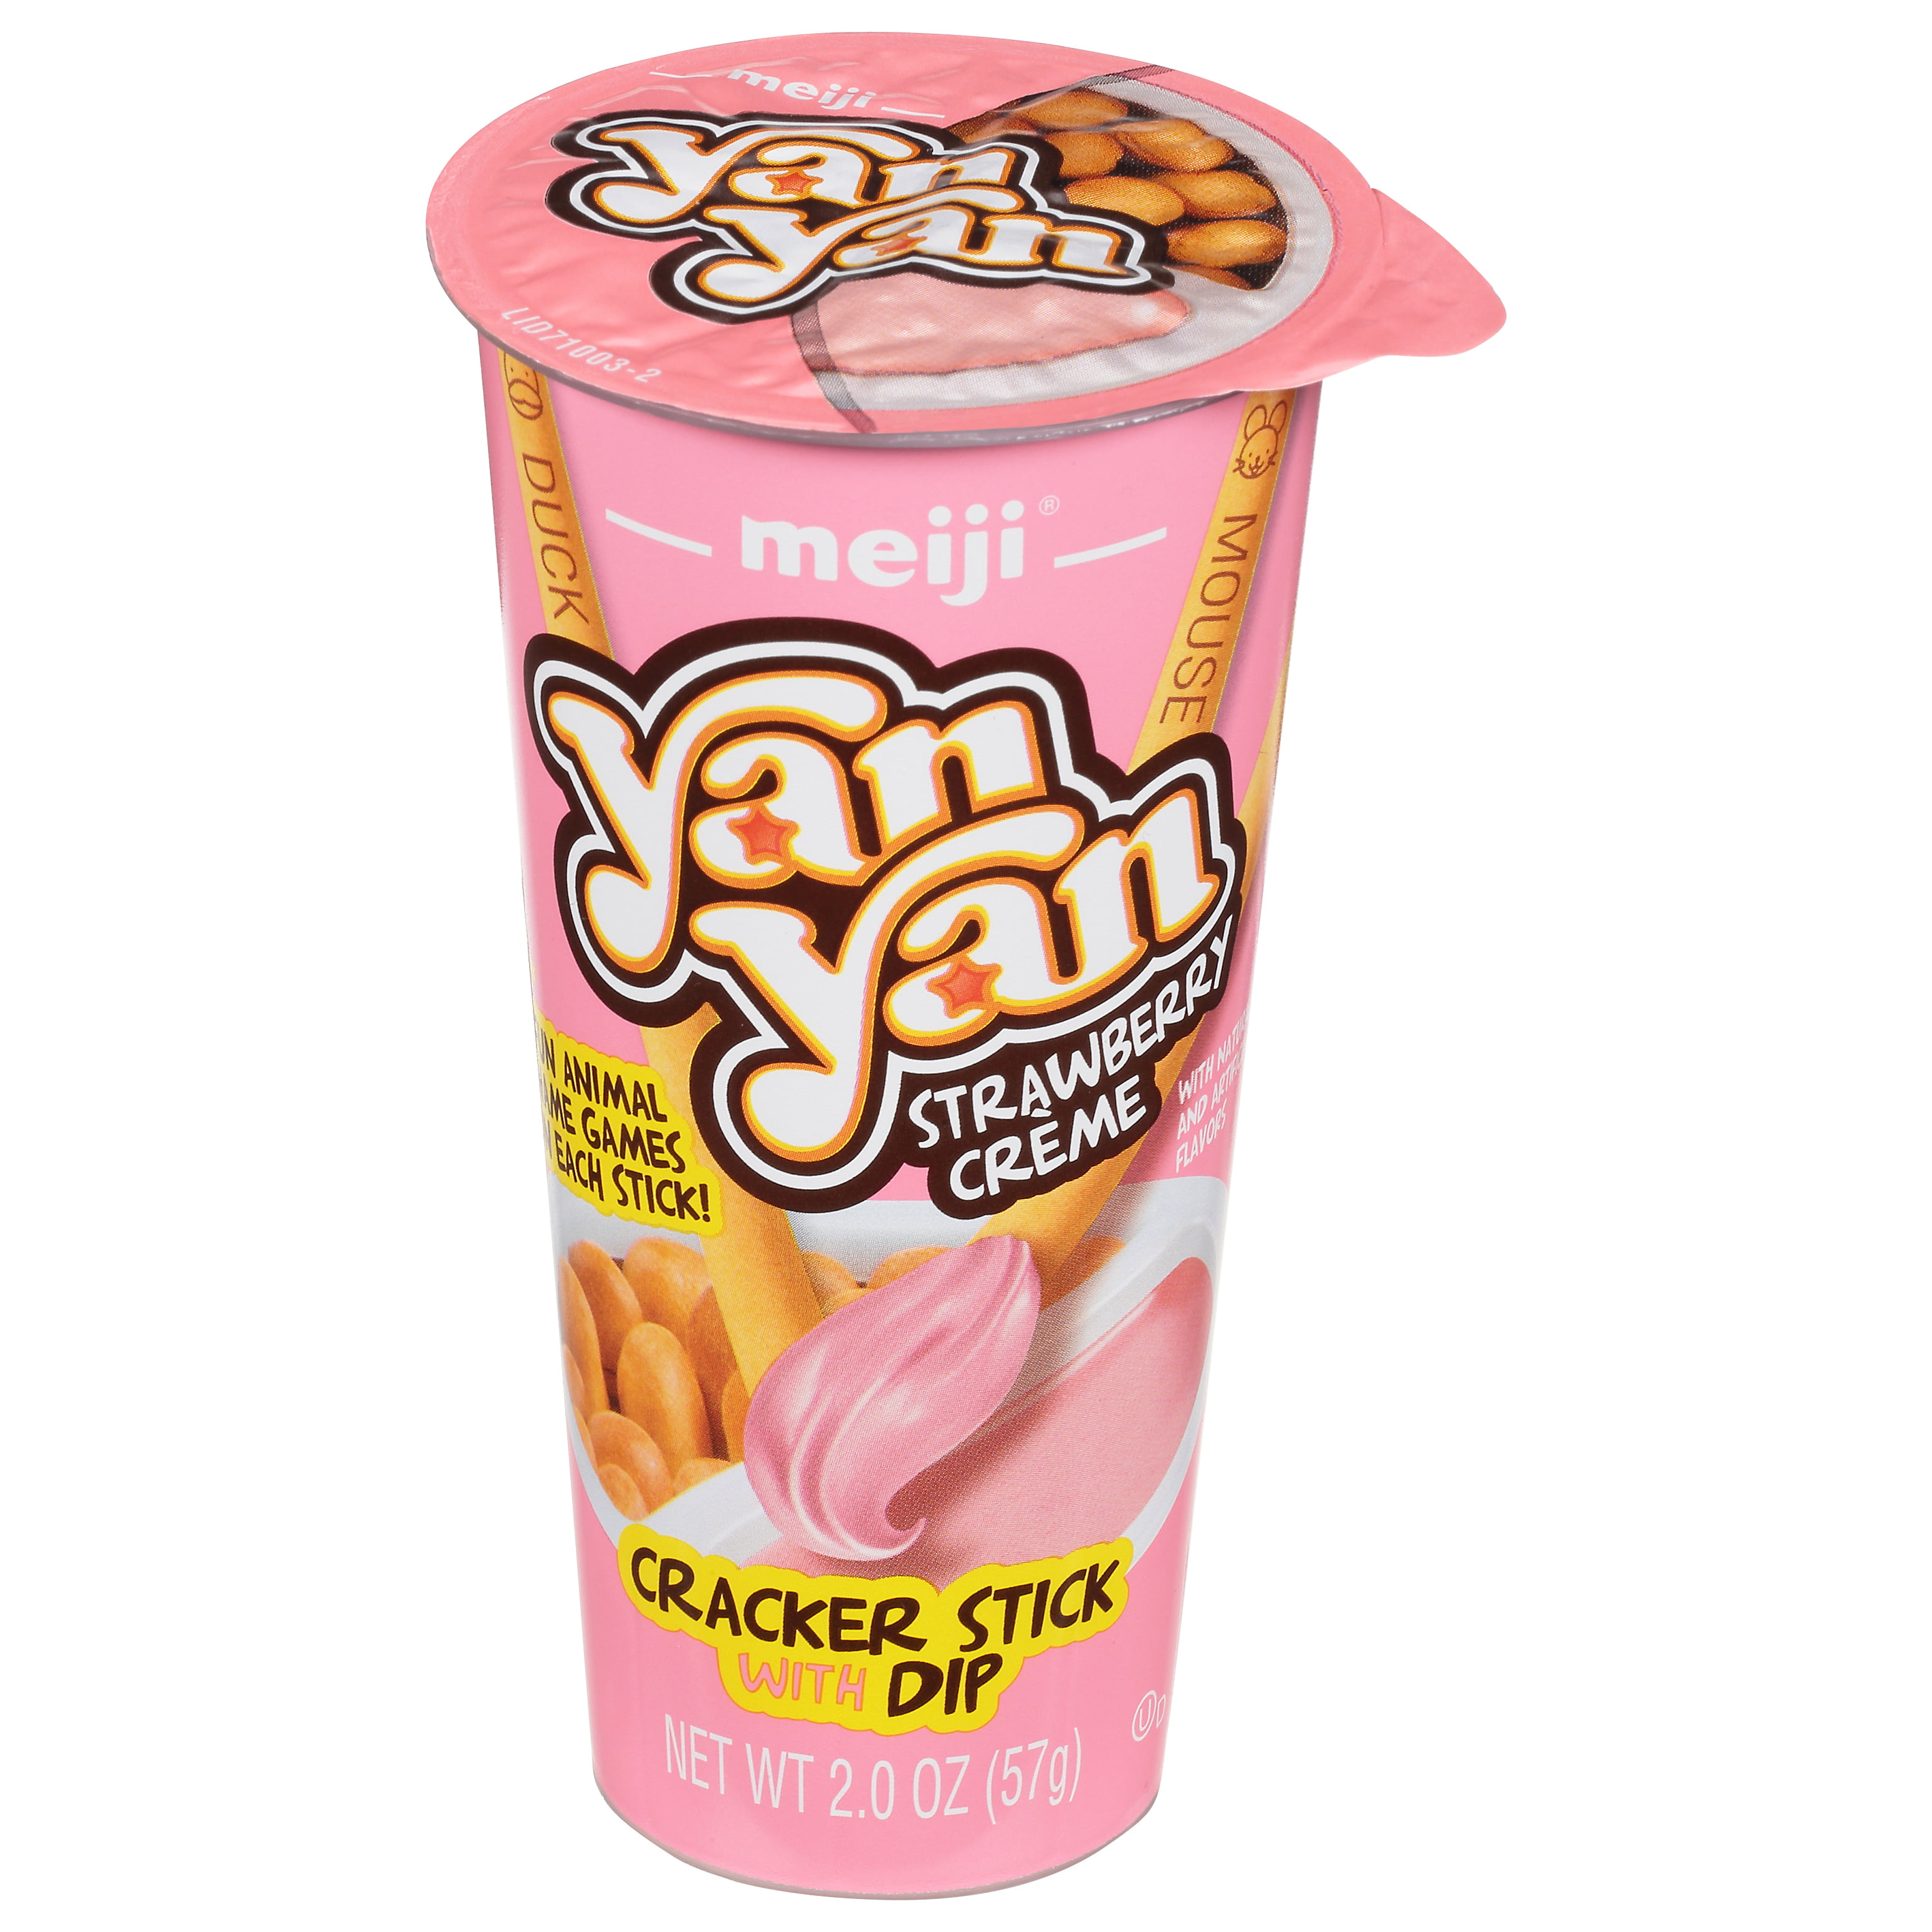 Meiji Yan Yan Cracker Stick With Dip Strawberry Cream Flavor 2oz